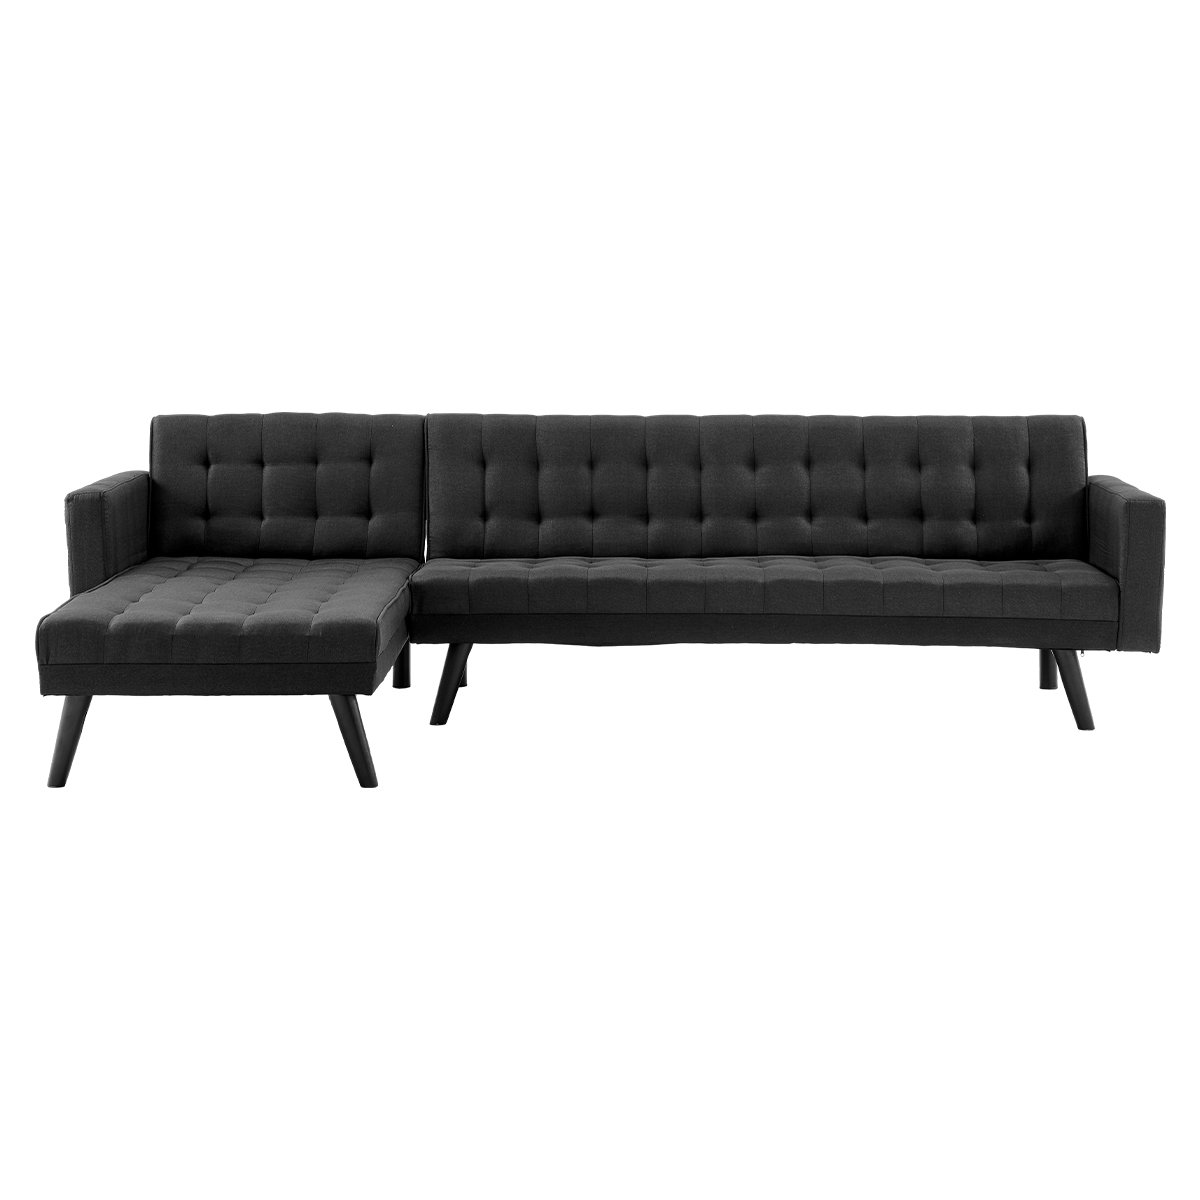 Sarantino 3-Seater Corner Wooden Sofa Bed Lounge Chaise Sofa Black 1